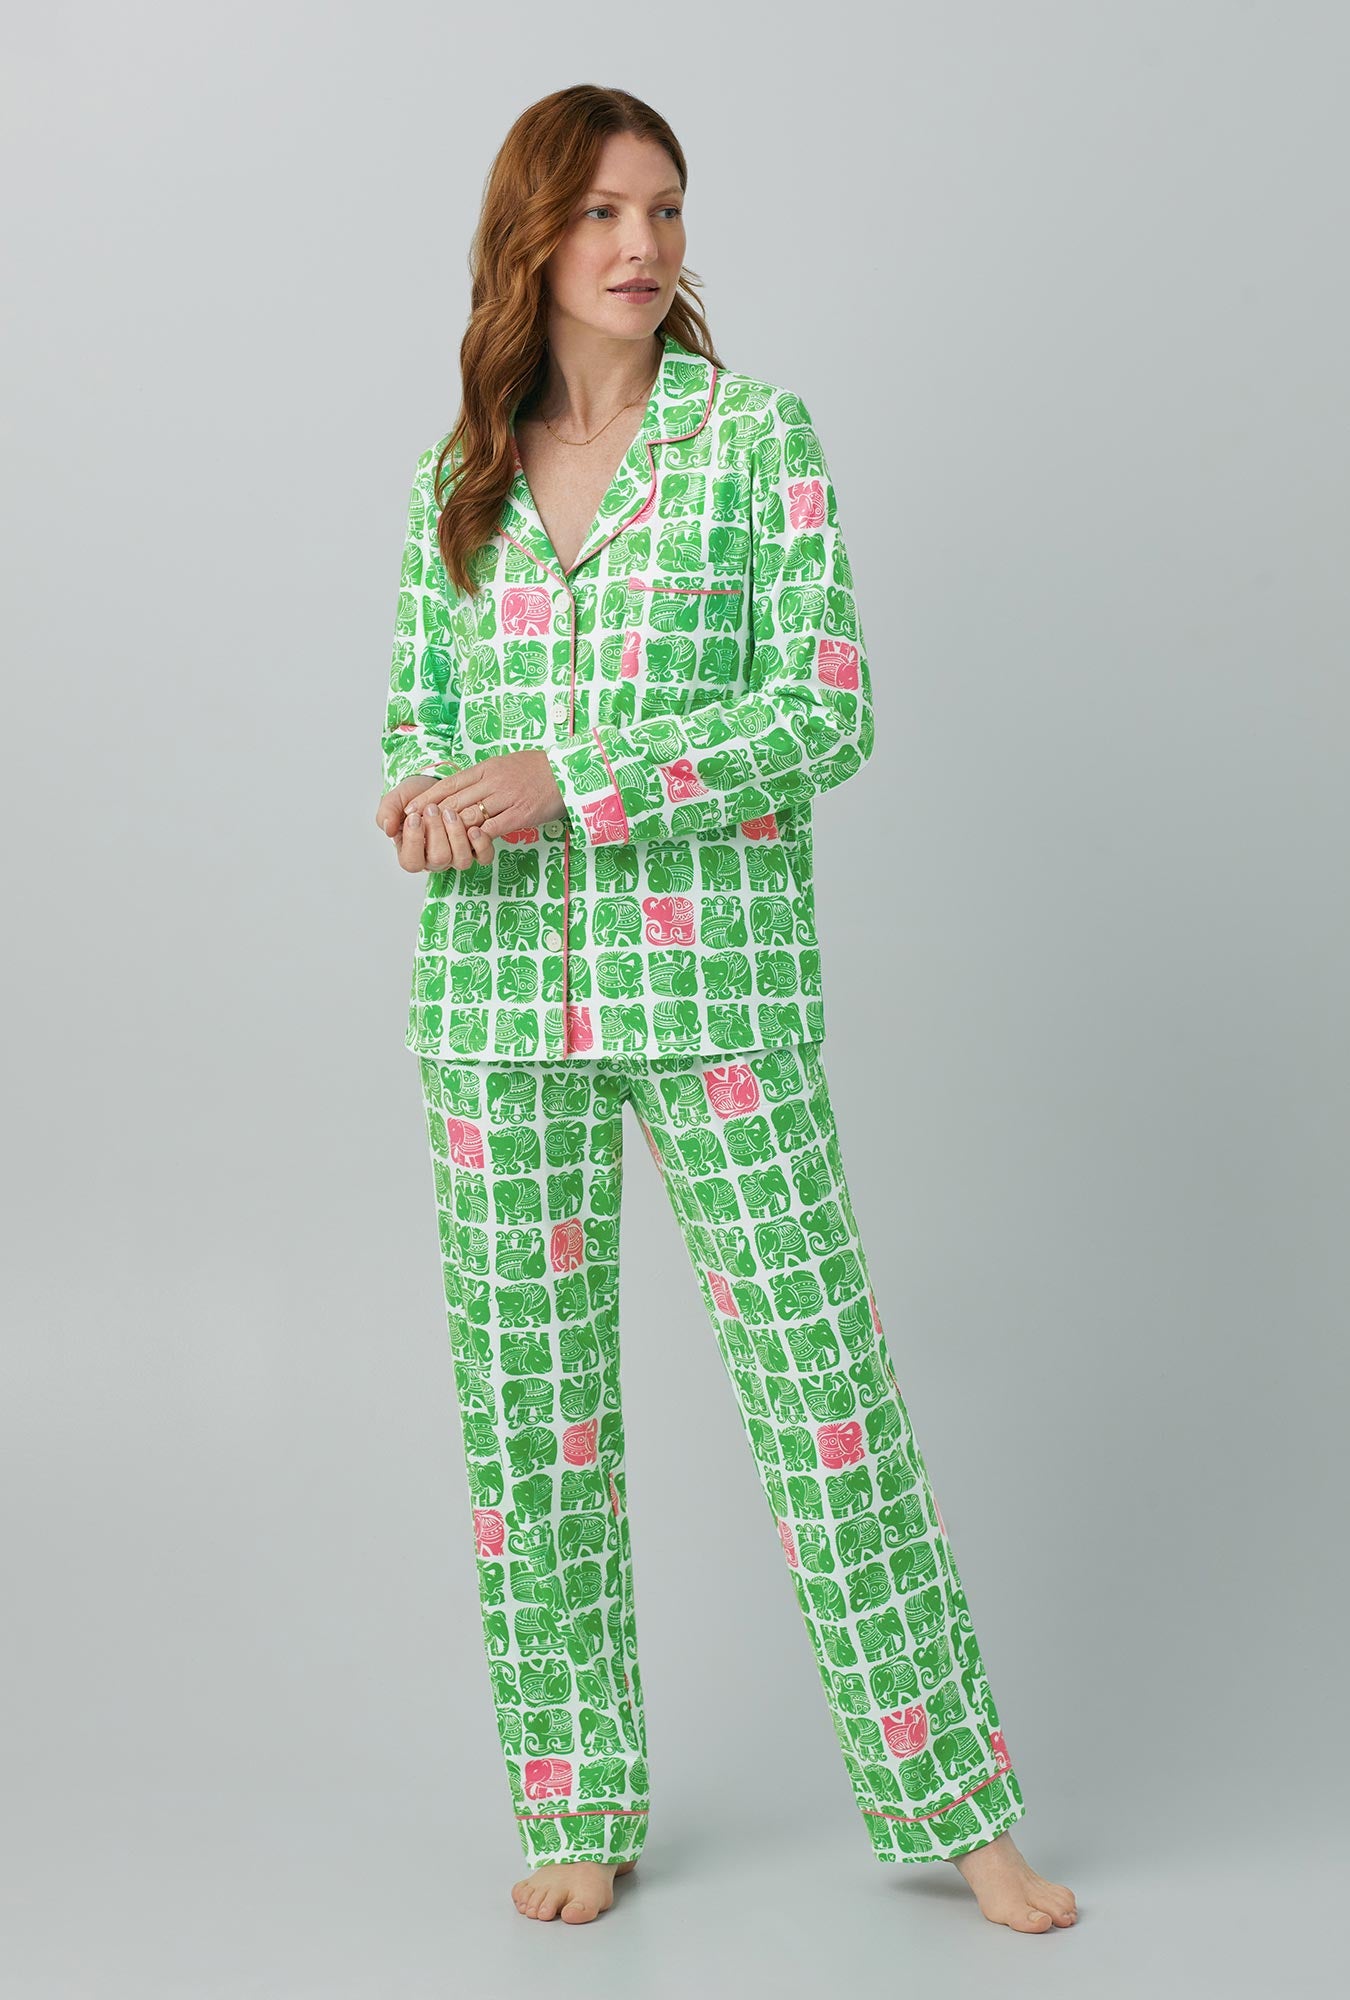 A lady wearing green Long Sleeve Classic Stretch Jersey PJ Set with  Turk Elephants print